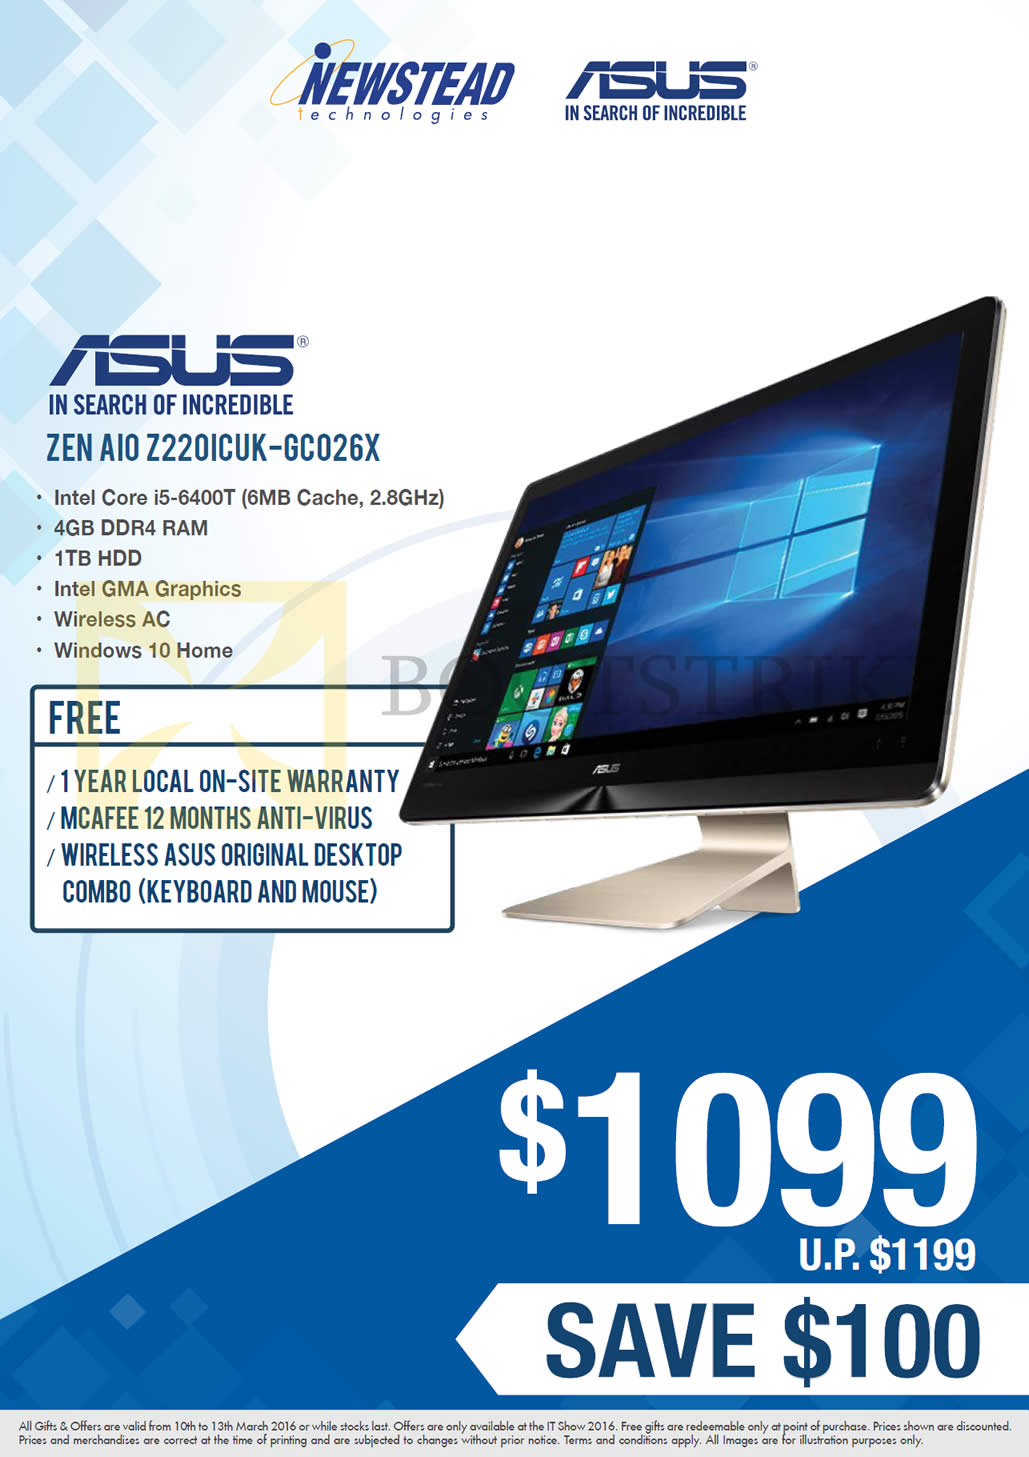 IT SHOW 2016 price list image brochure of ASUS Newstead ZEN AIO Desktop PC Z220ICUK-GC026X